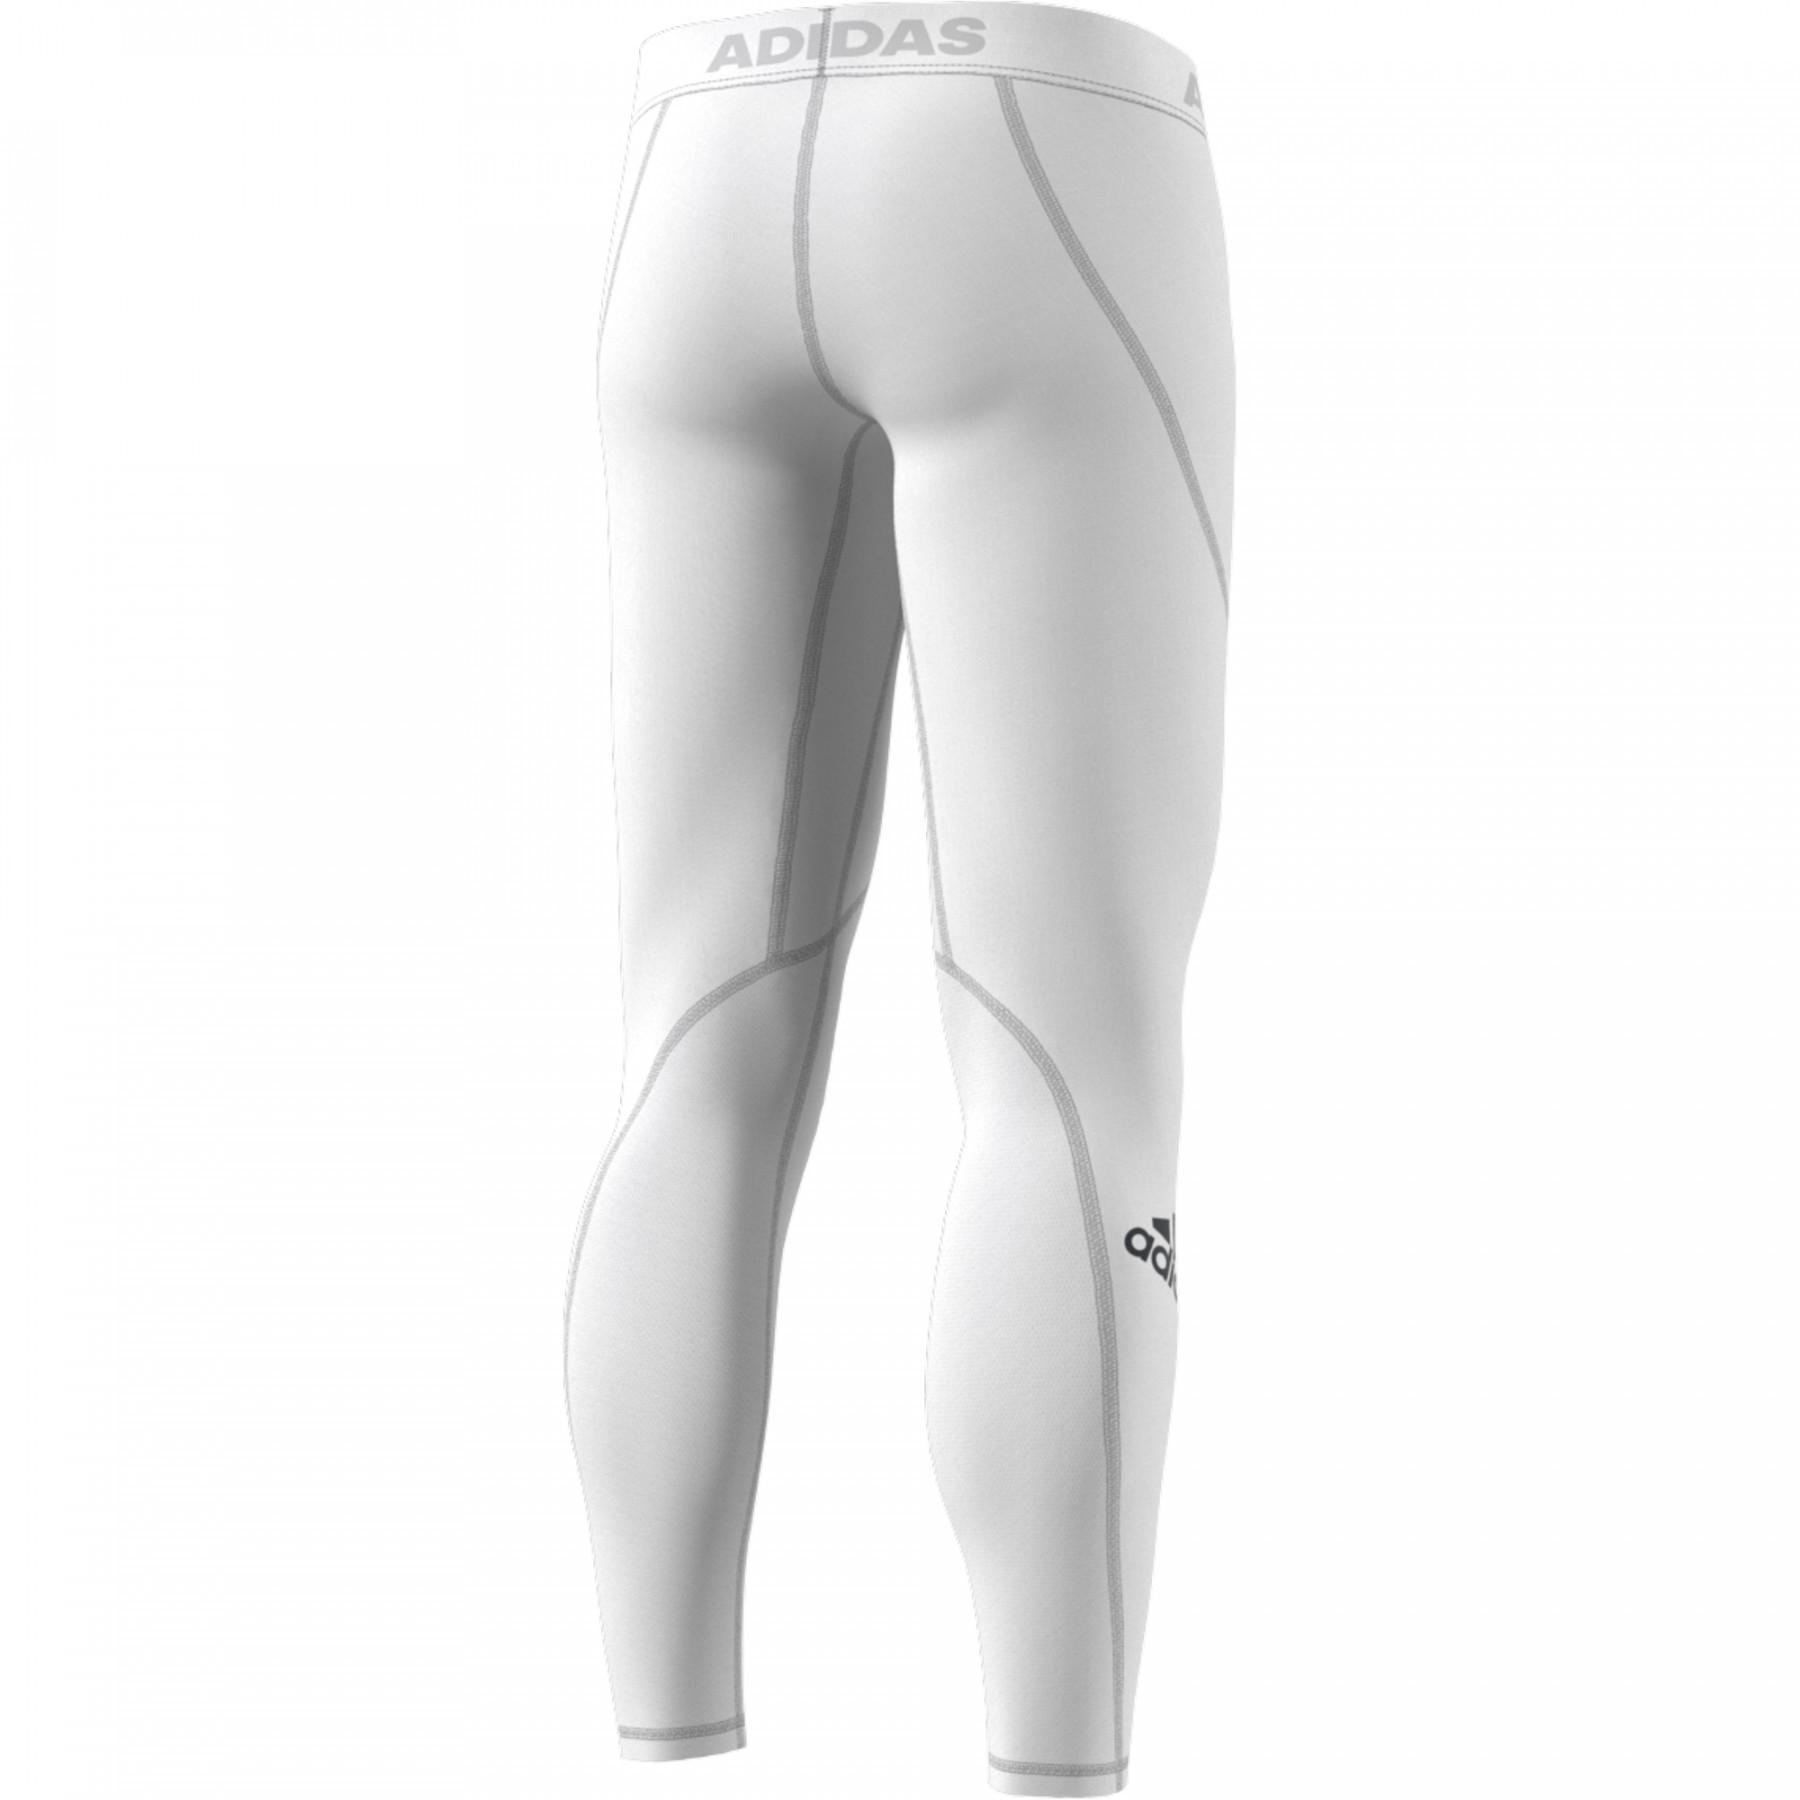 Panty adidas Alphaskin Sport Long